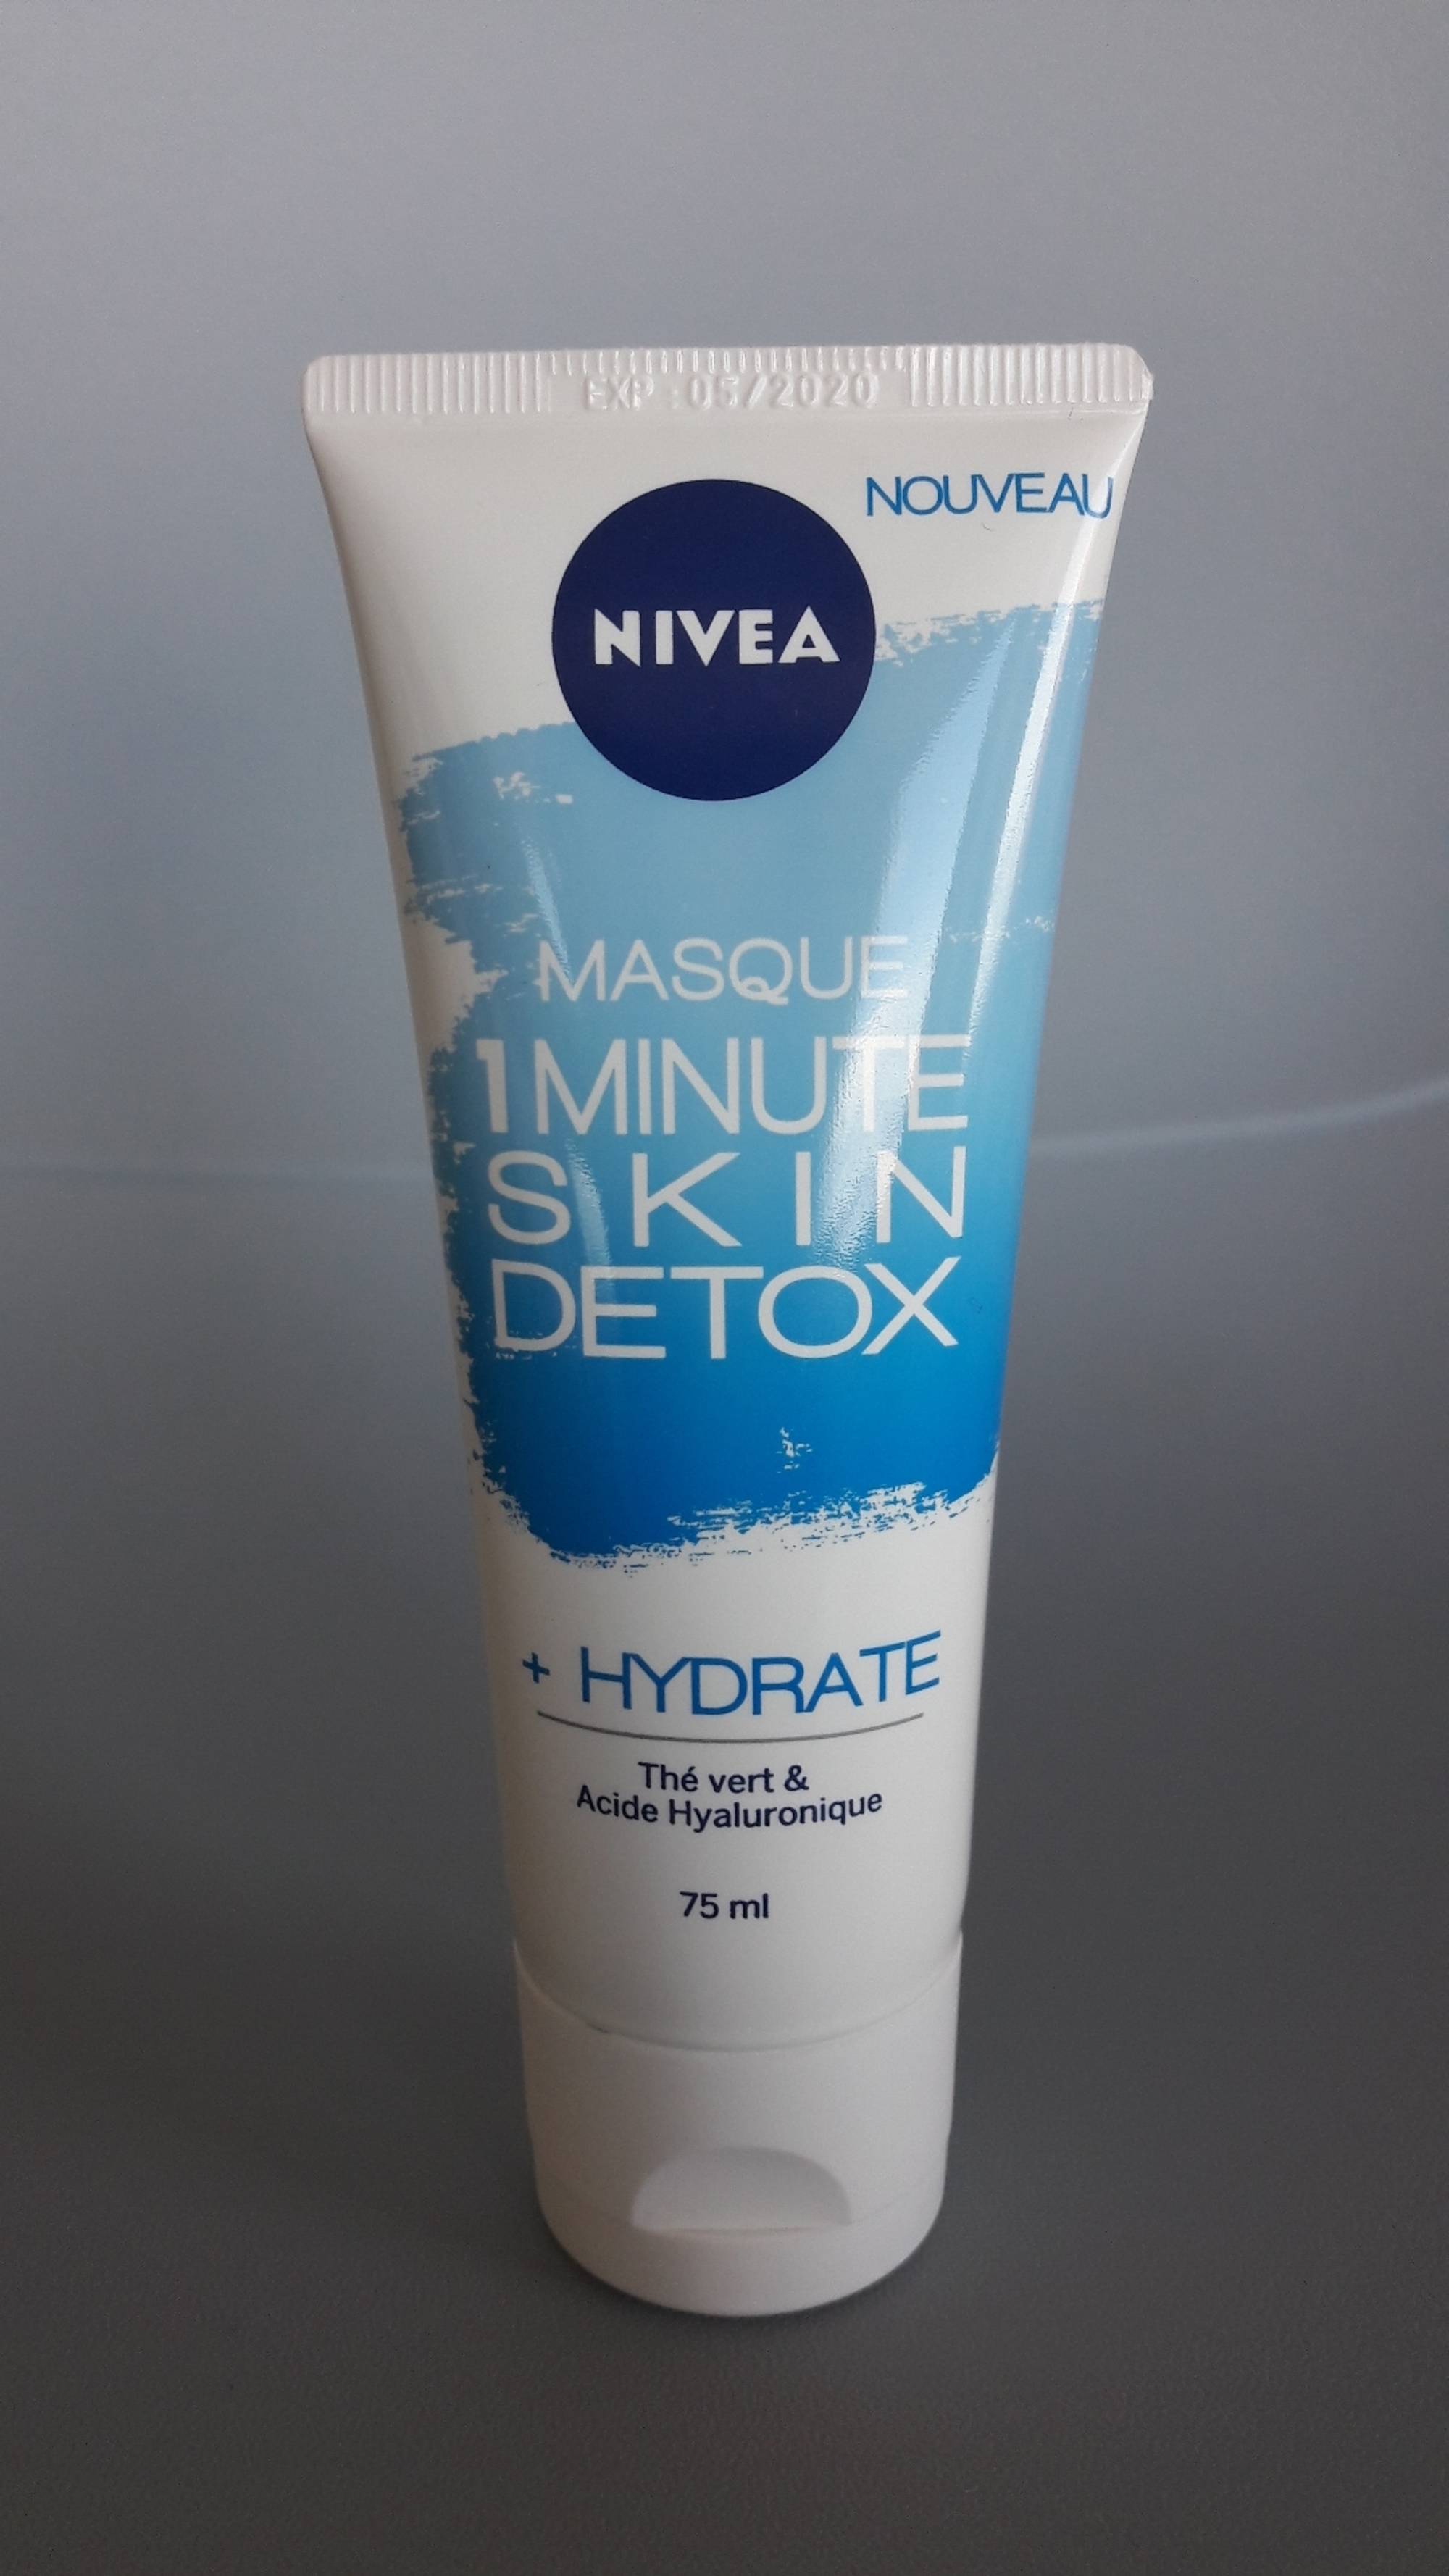 NIVEA - Masque 1 minute skin détox